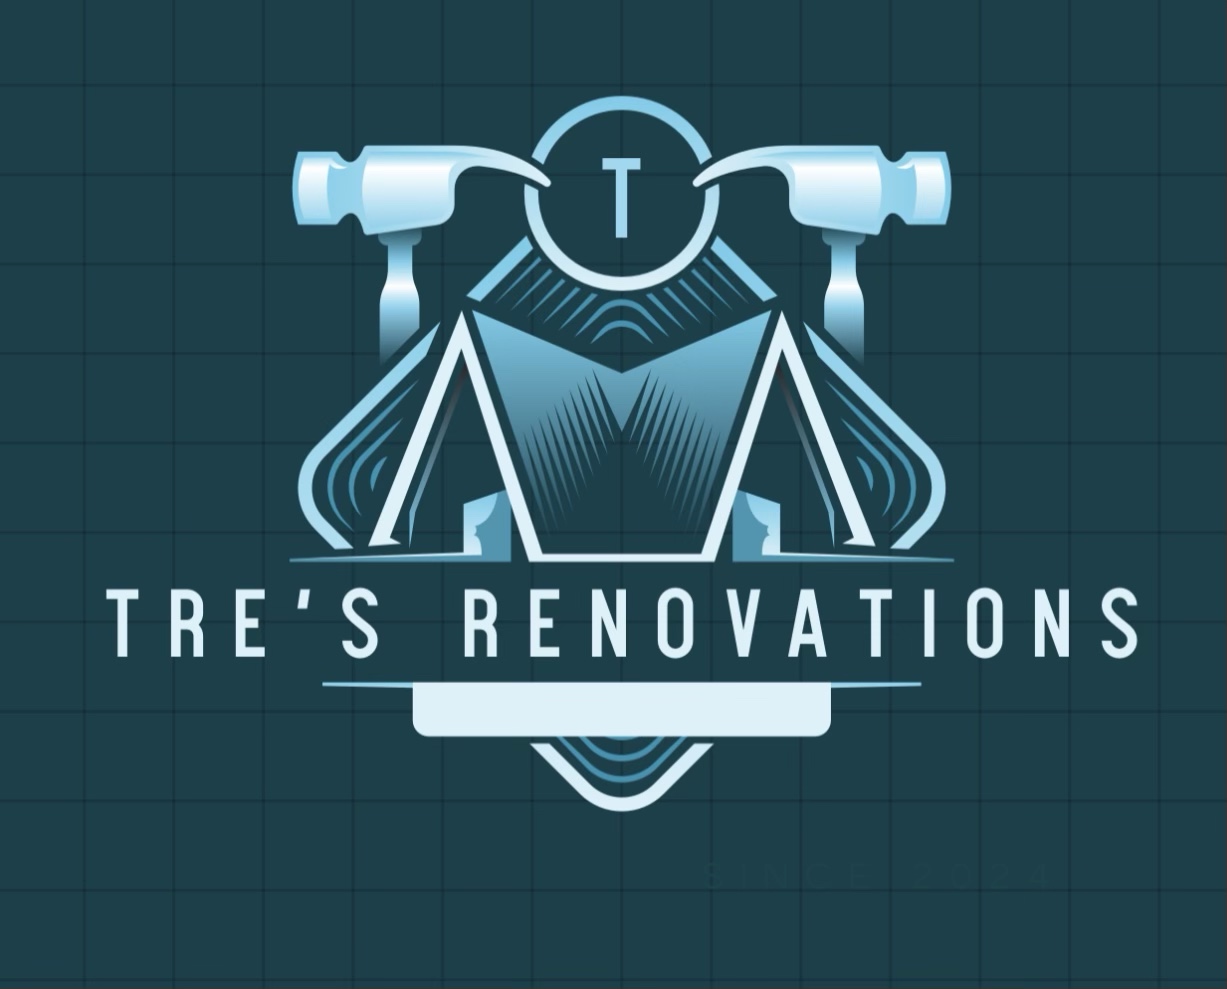 Tre’s Renovations co.'s logo